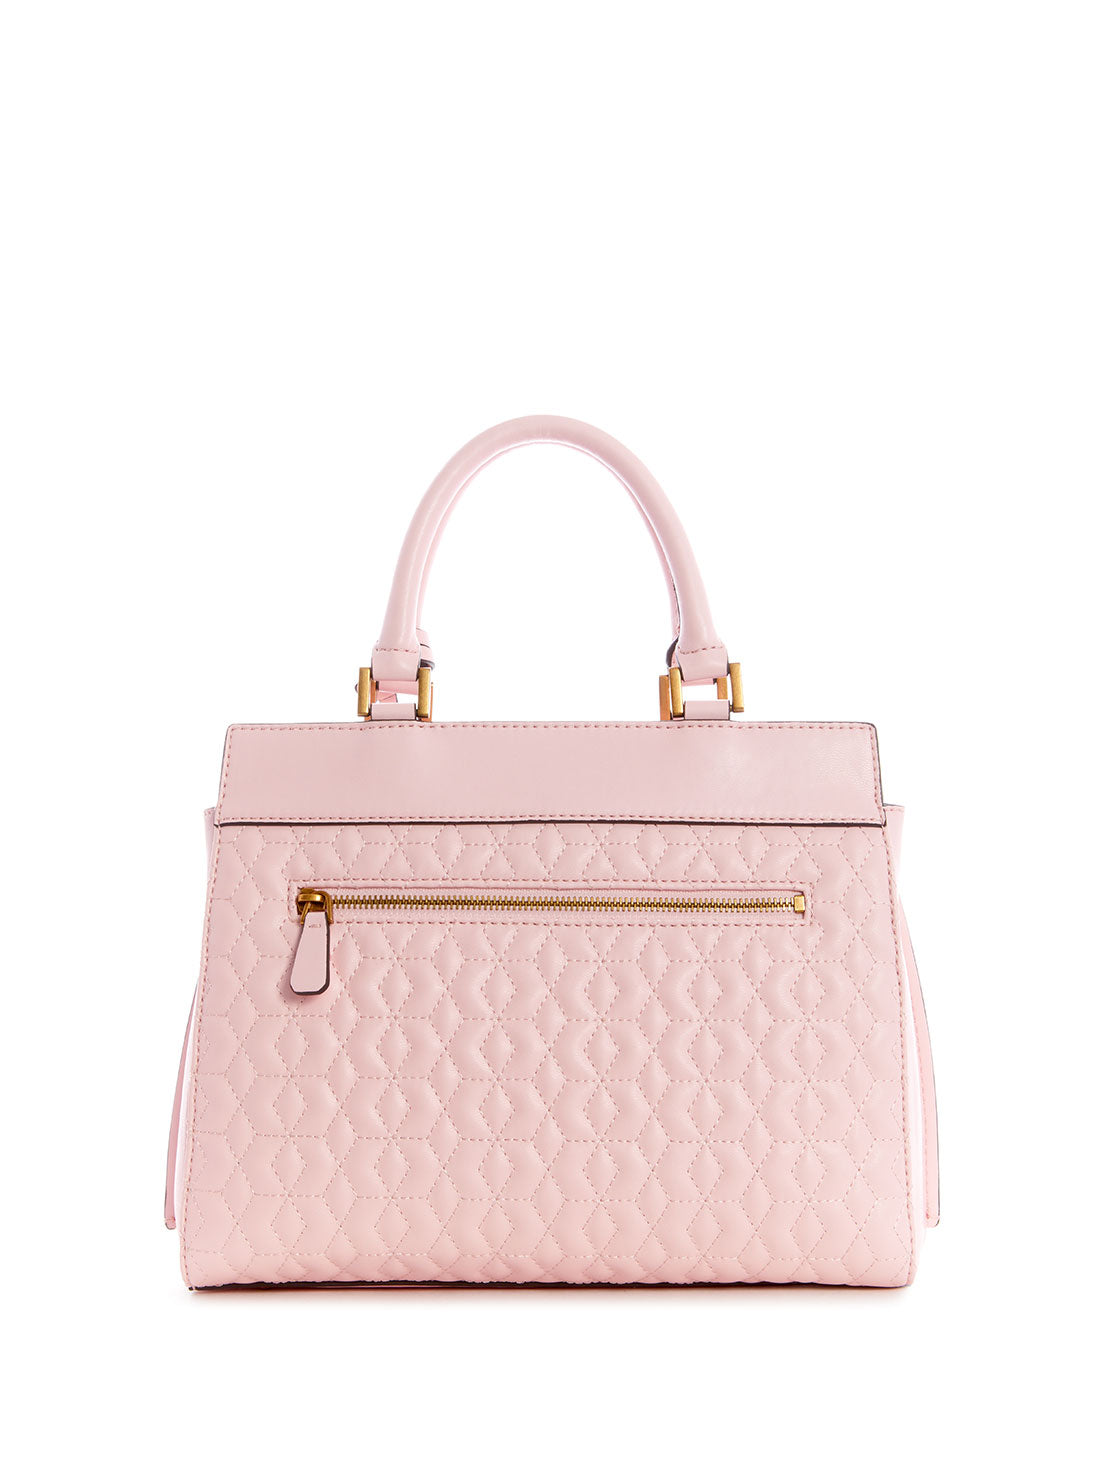 GUESS Women's Pink Katey Luxury Satchel Bag DB787026 Back View